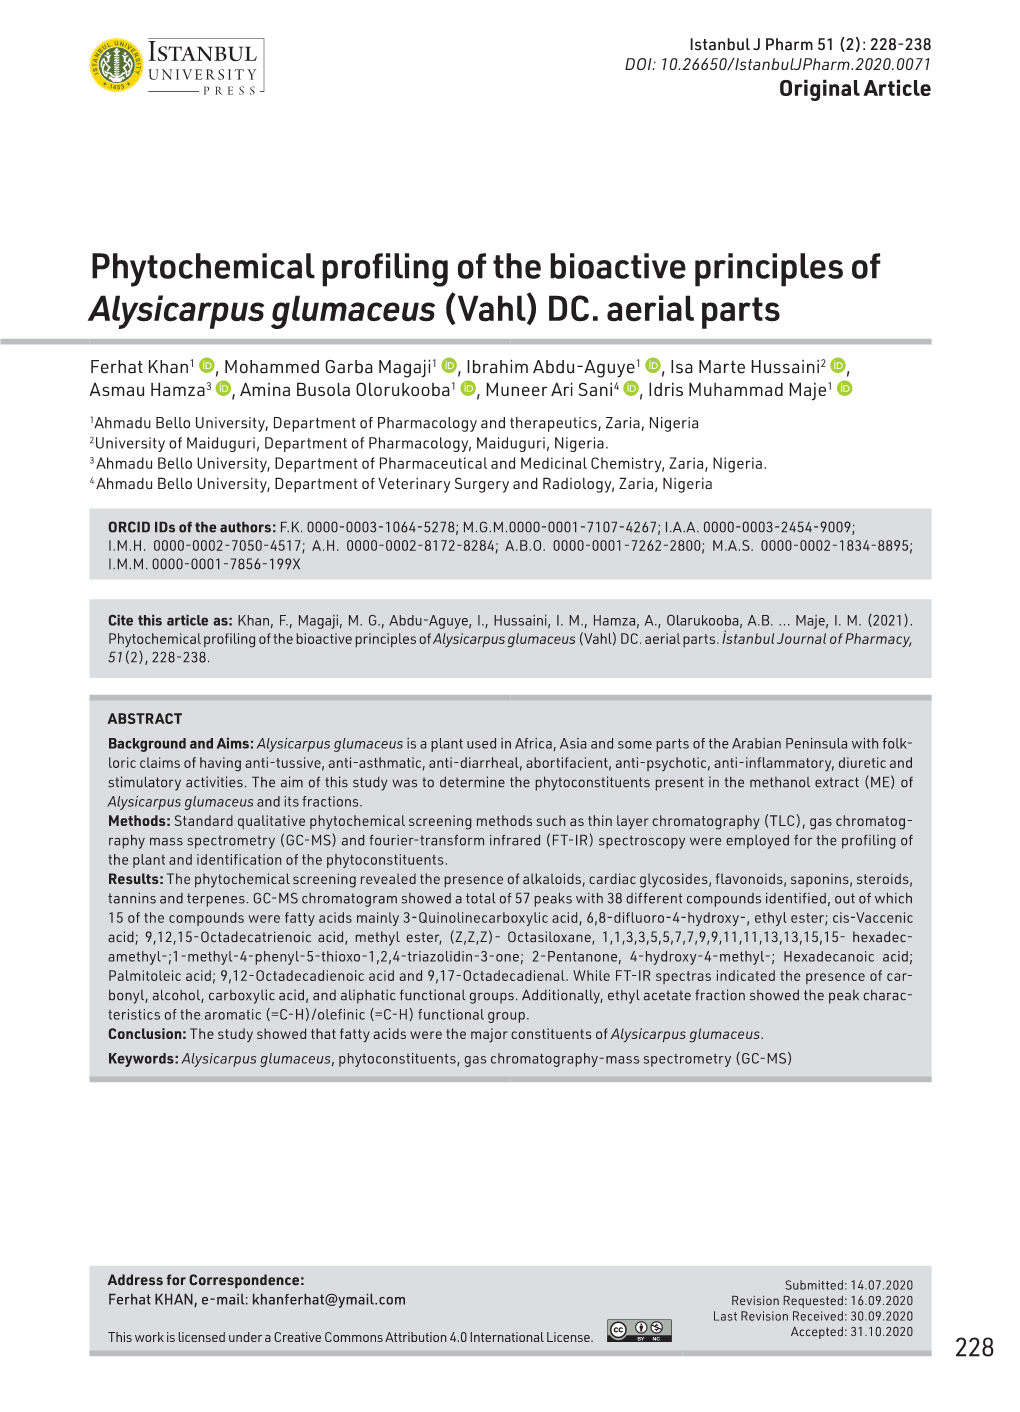 Phytochemical Profiling of the Bioactive Principles of Alysicarpus Glumaceus (Vahl) DC. Aerial Parts